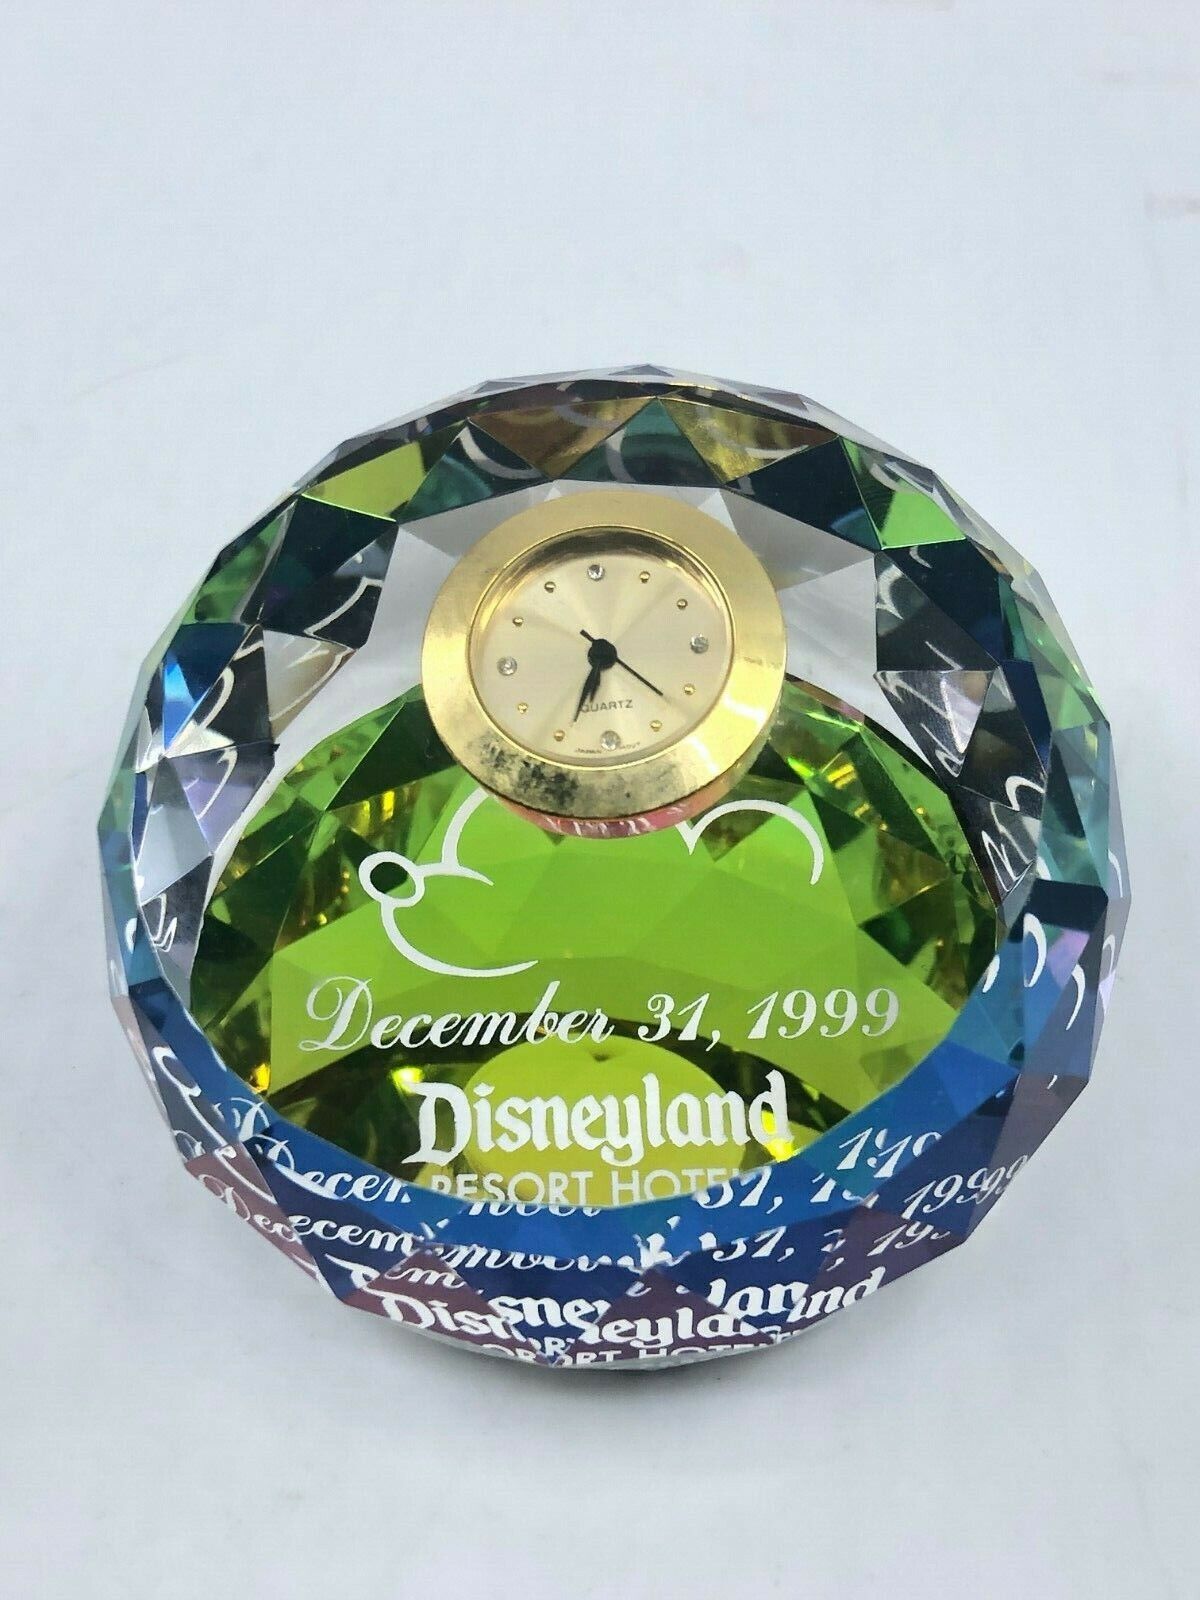 Rare Disneyland Millennium Hotels Paperweight Clock Faceted December 31, 1999